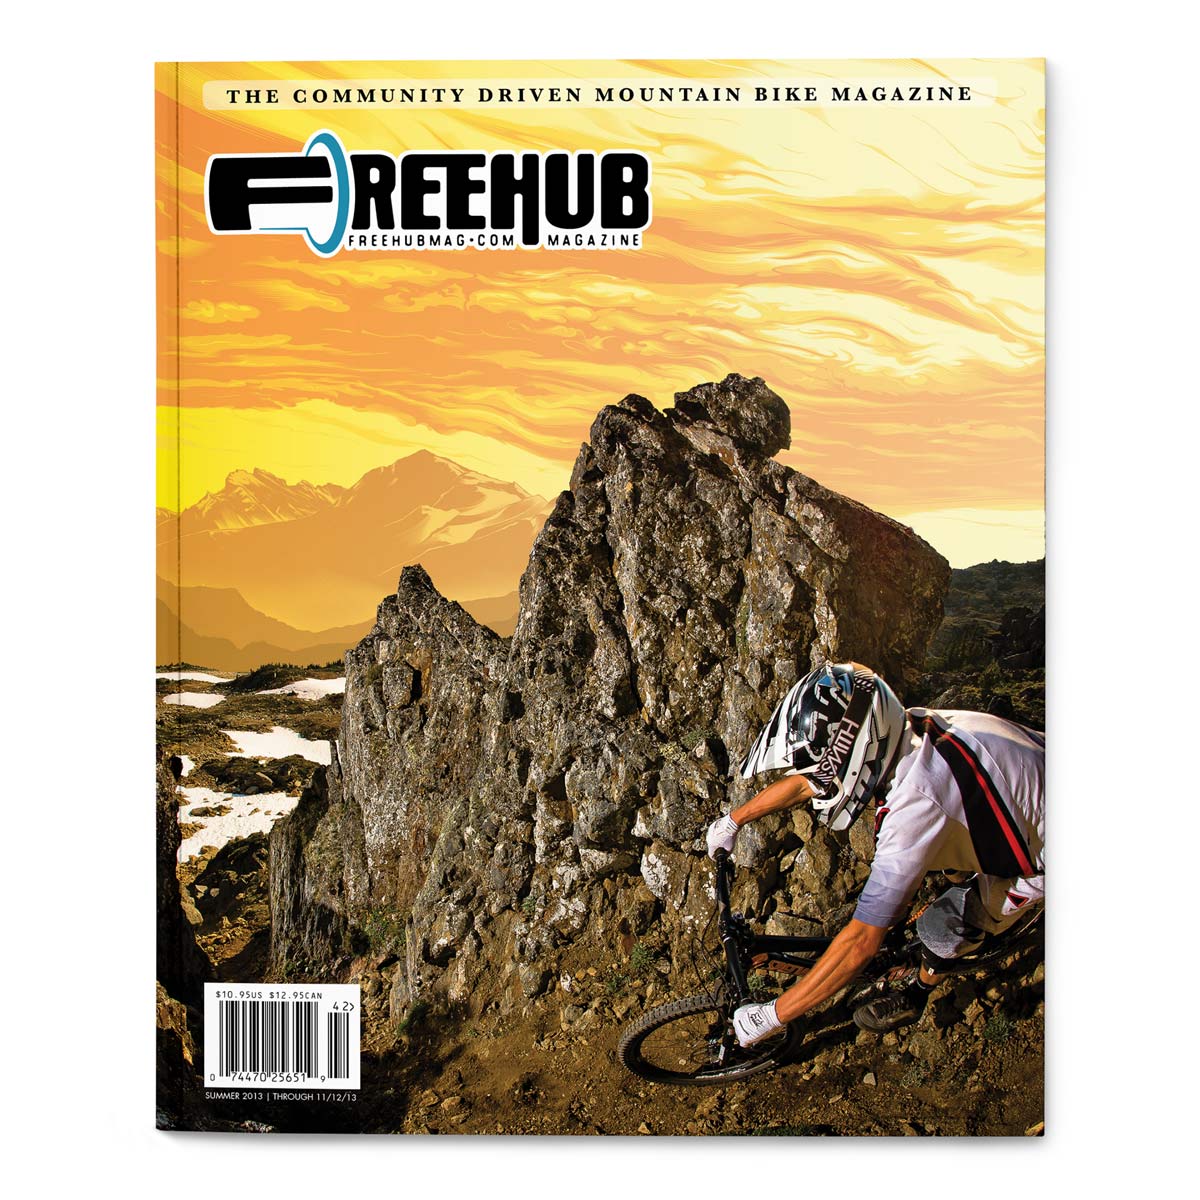 Freehub Issue 4.2